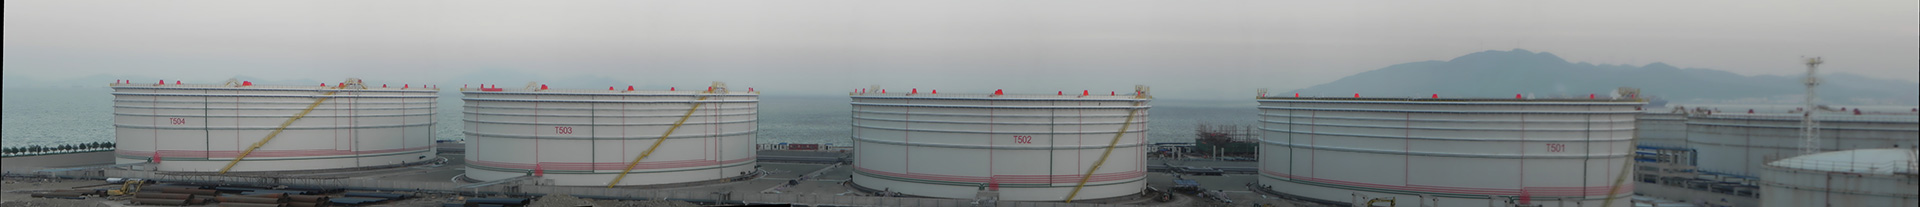 4x110,000m³ Universal (Zhoushan) Petroleum Storage Tank Project #5 Tank Group Engineering